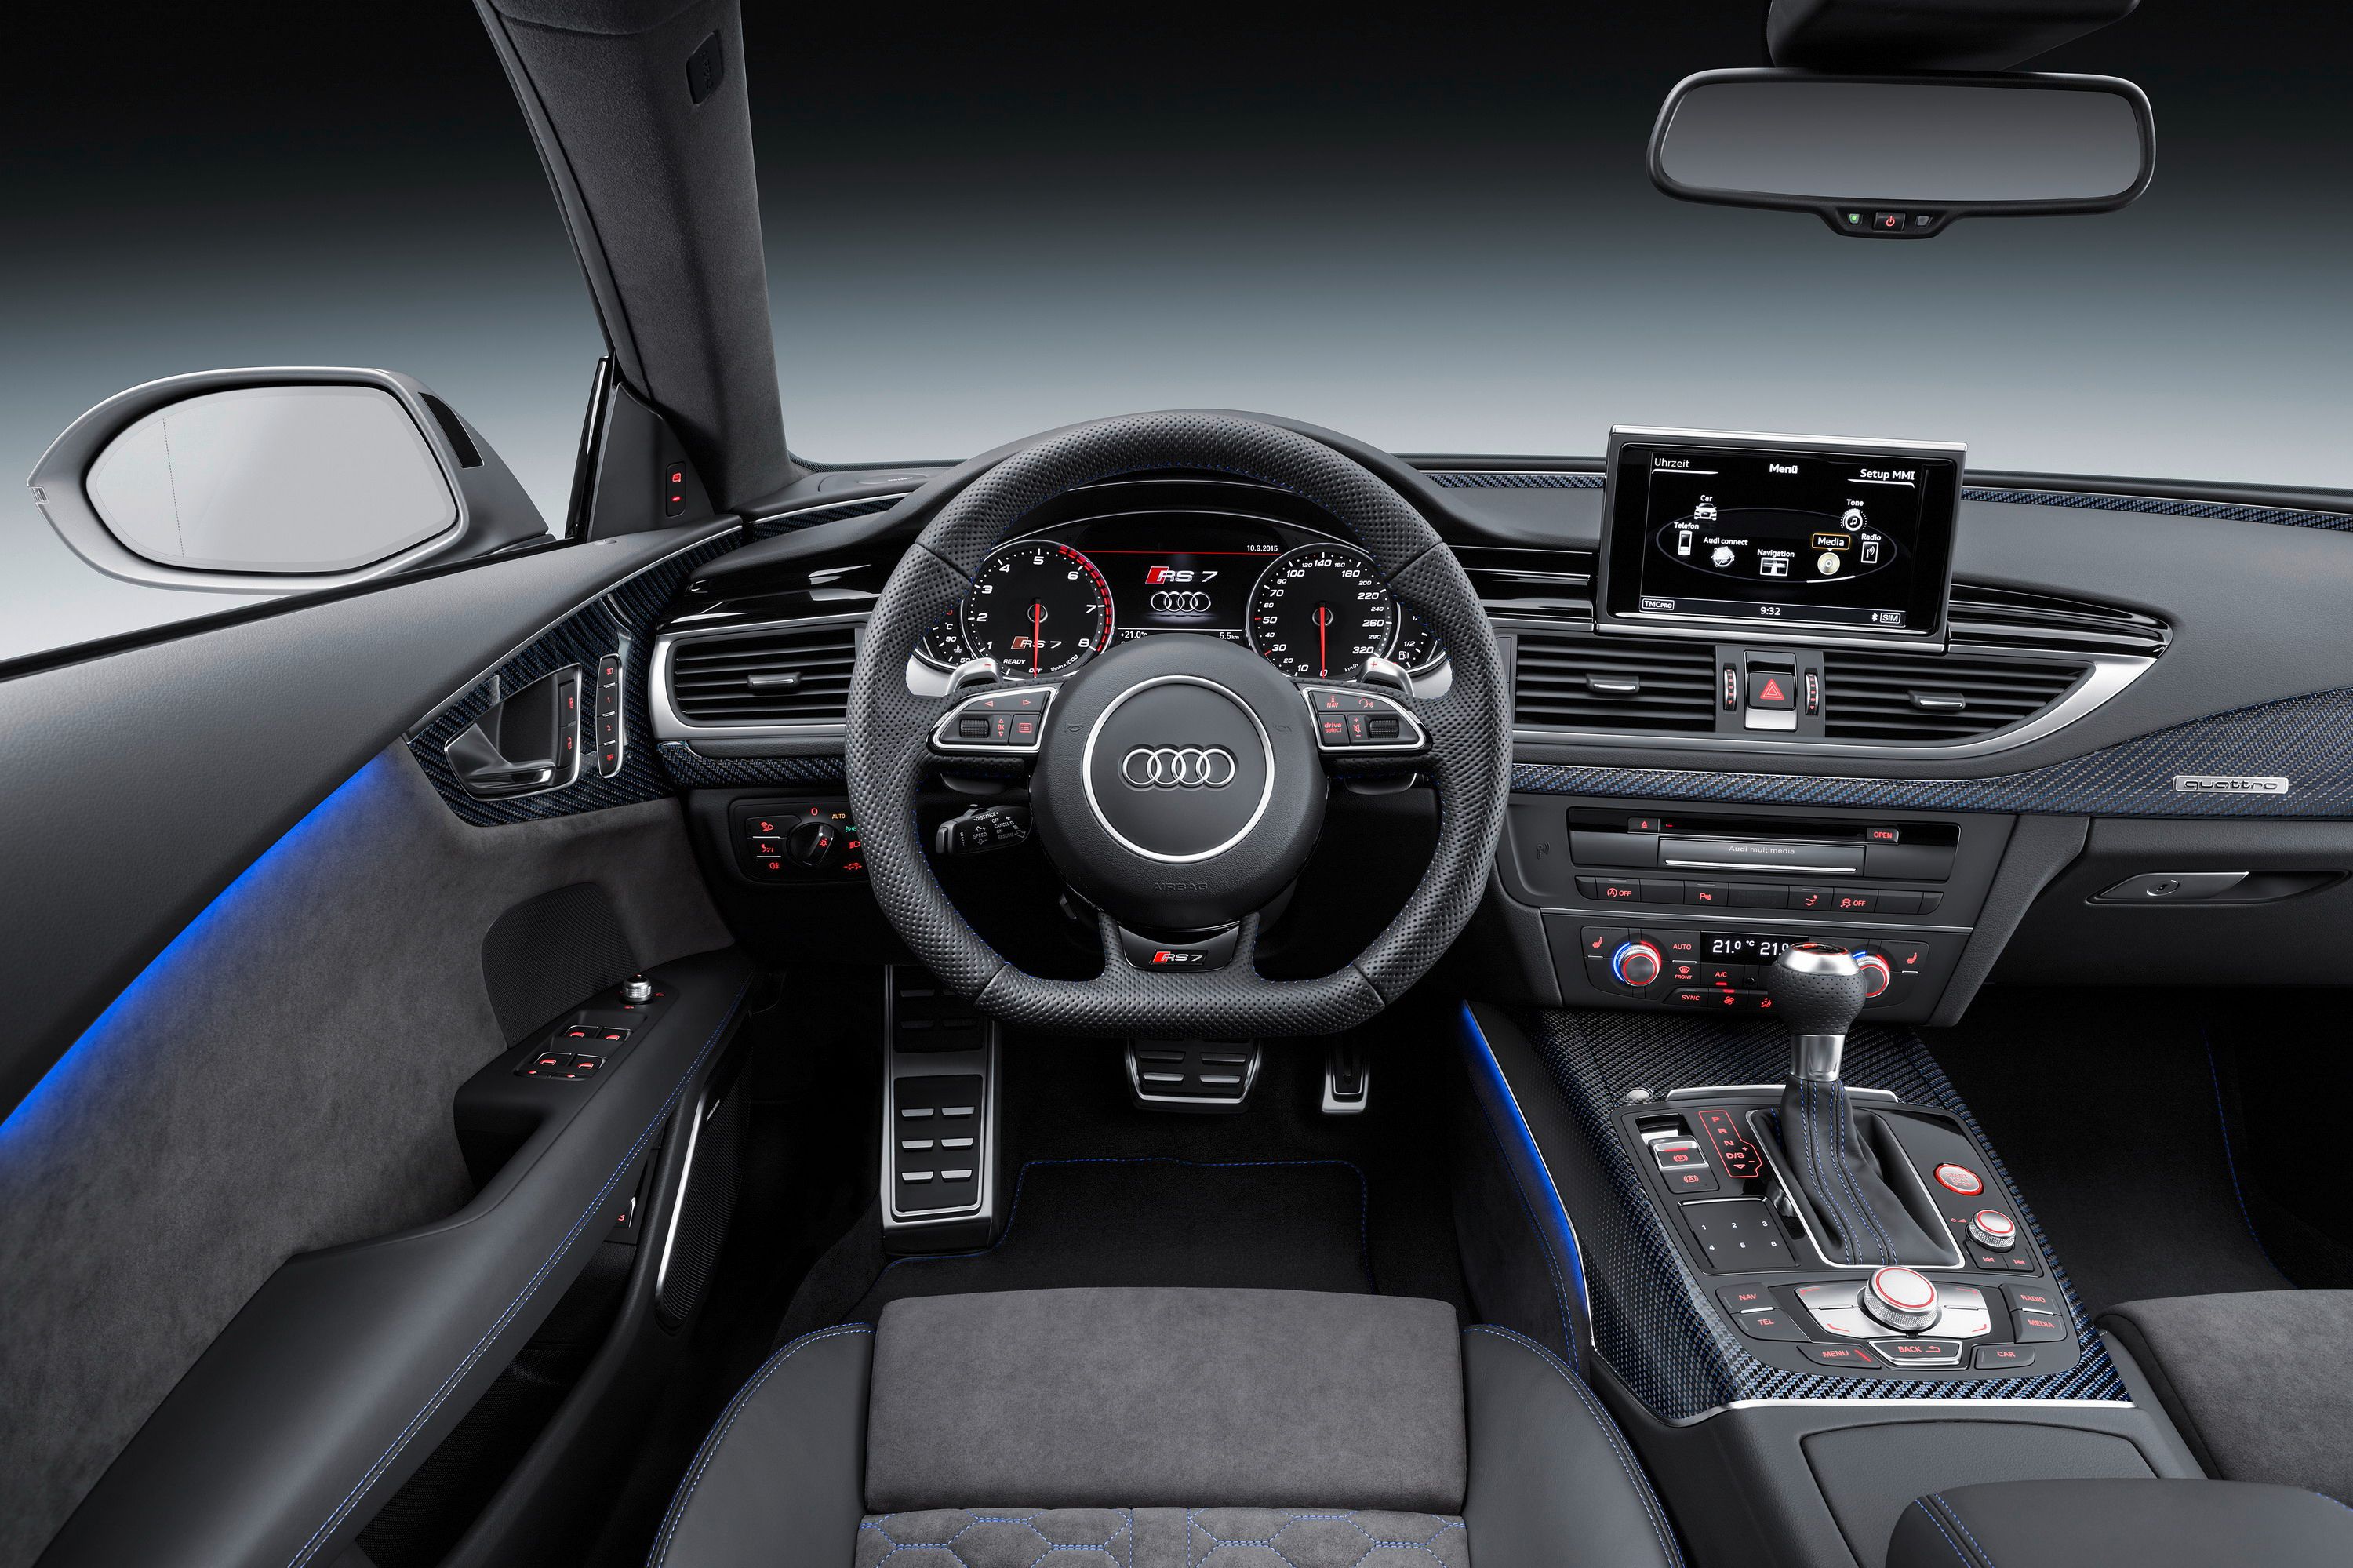 2016 Audi RS 7 Sportback Performance 